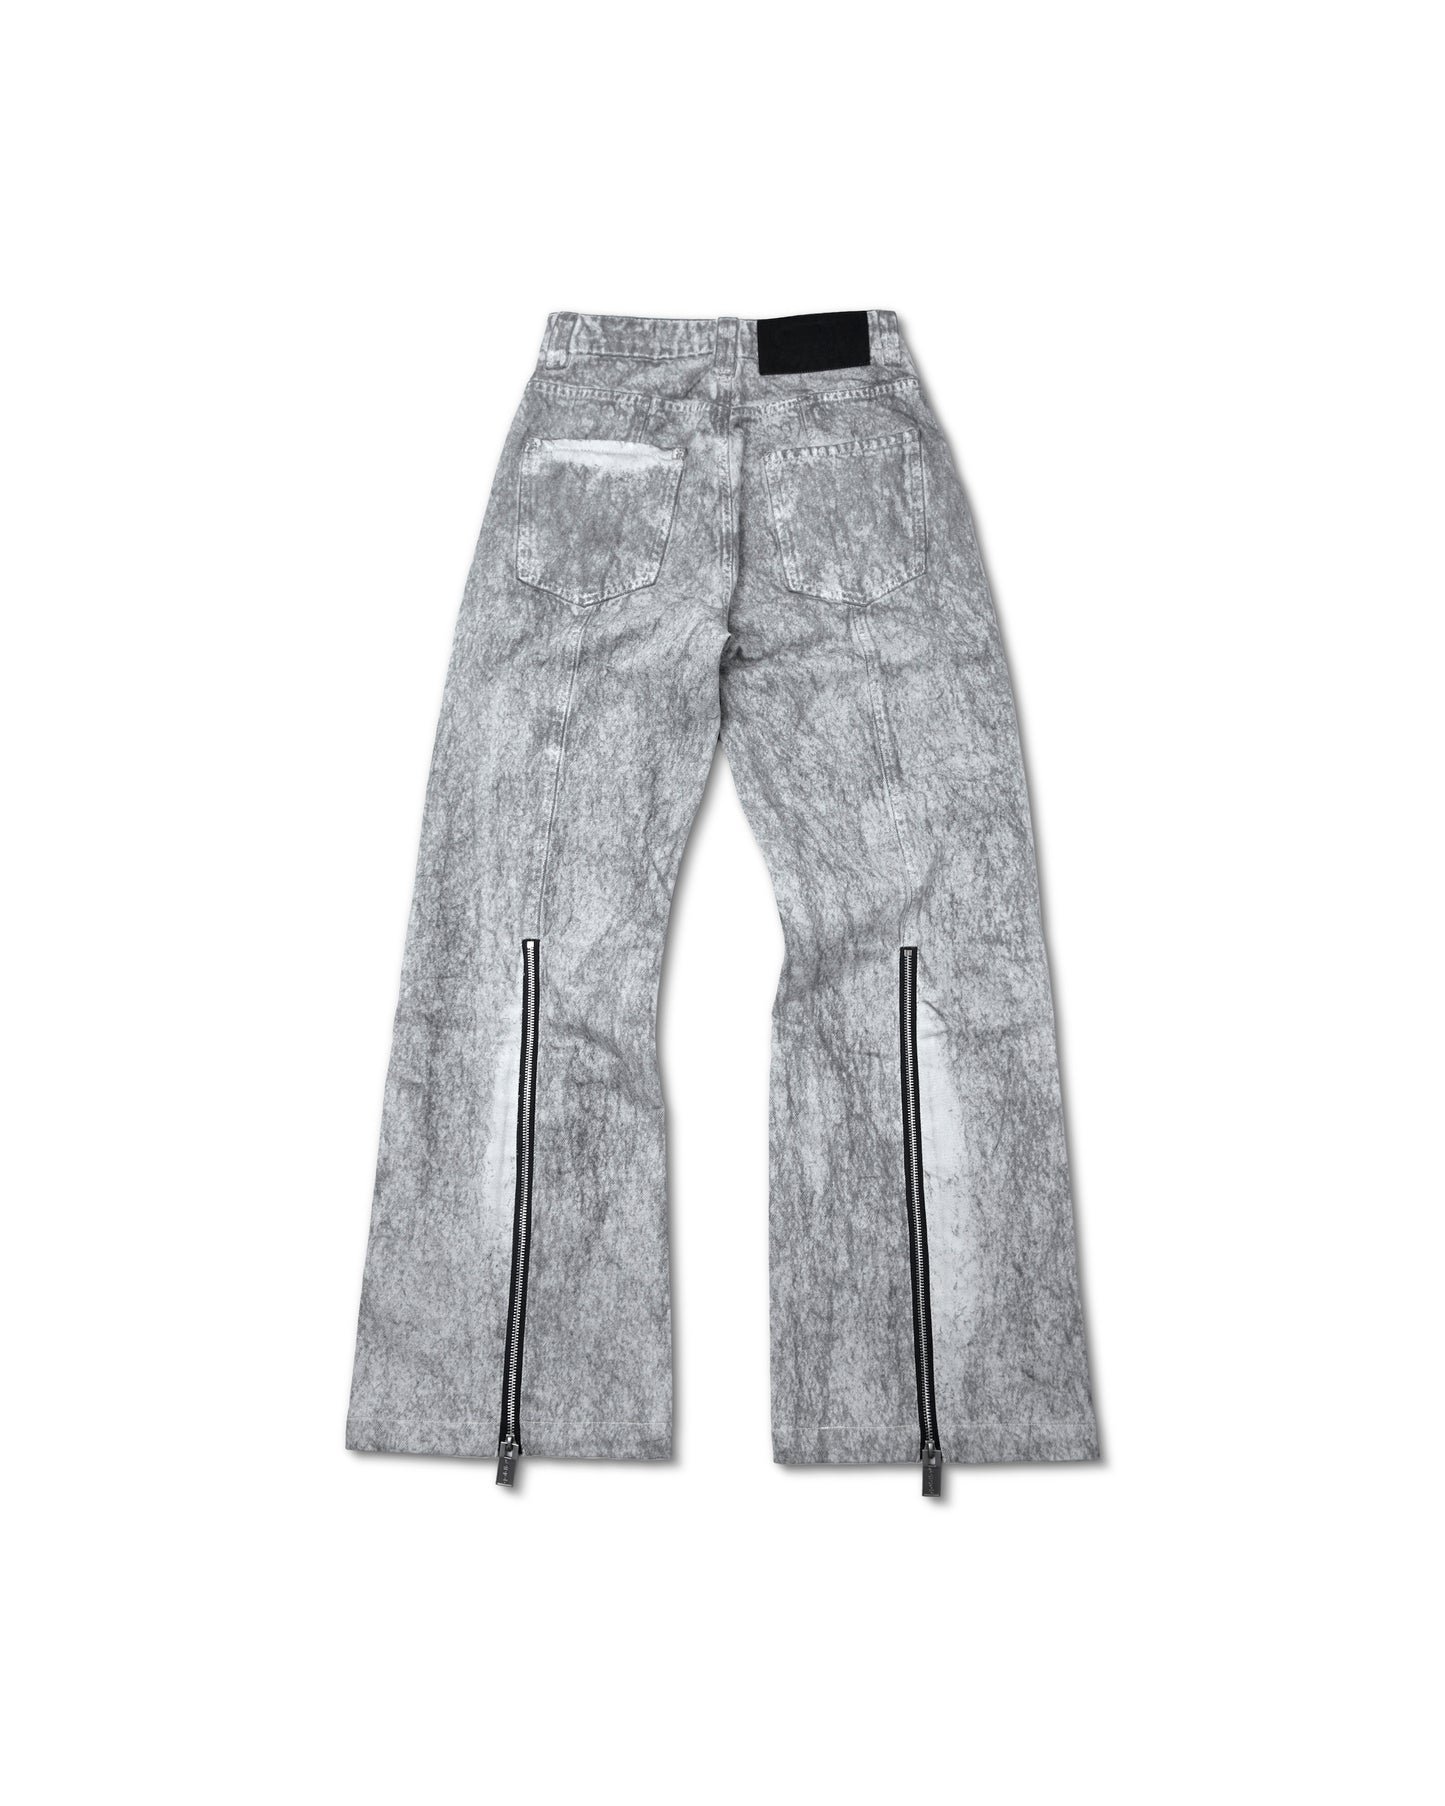 zipped-grey-washed-denim-pants-goldie-astoud